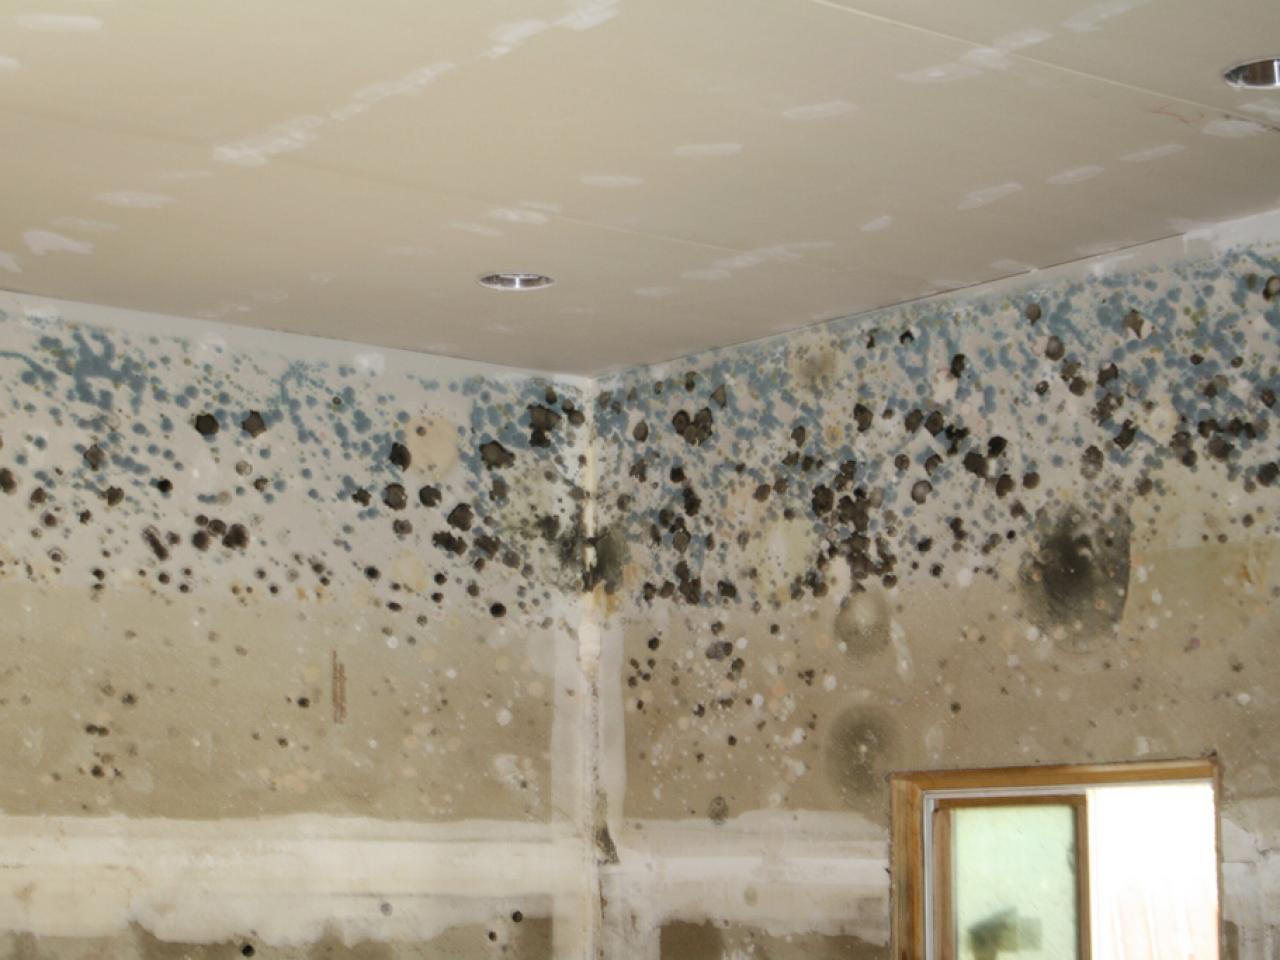 Mark Roemer image of a moldy wall